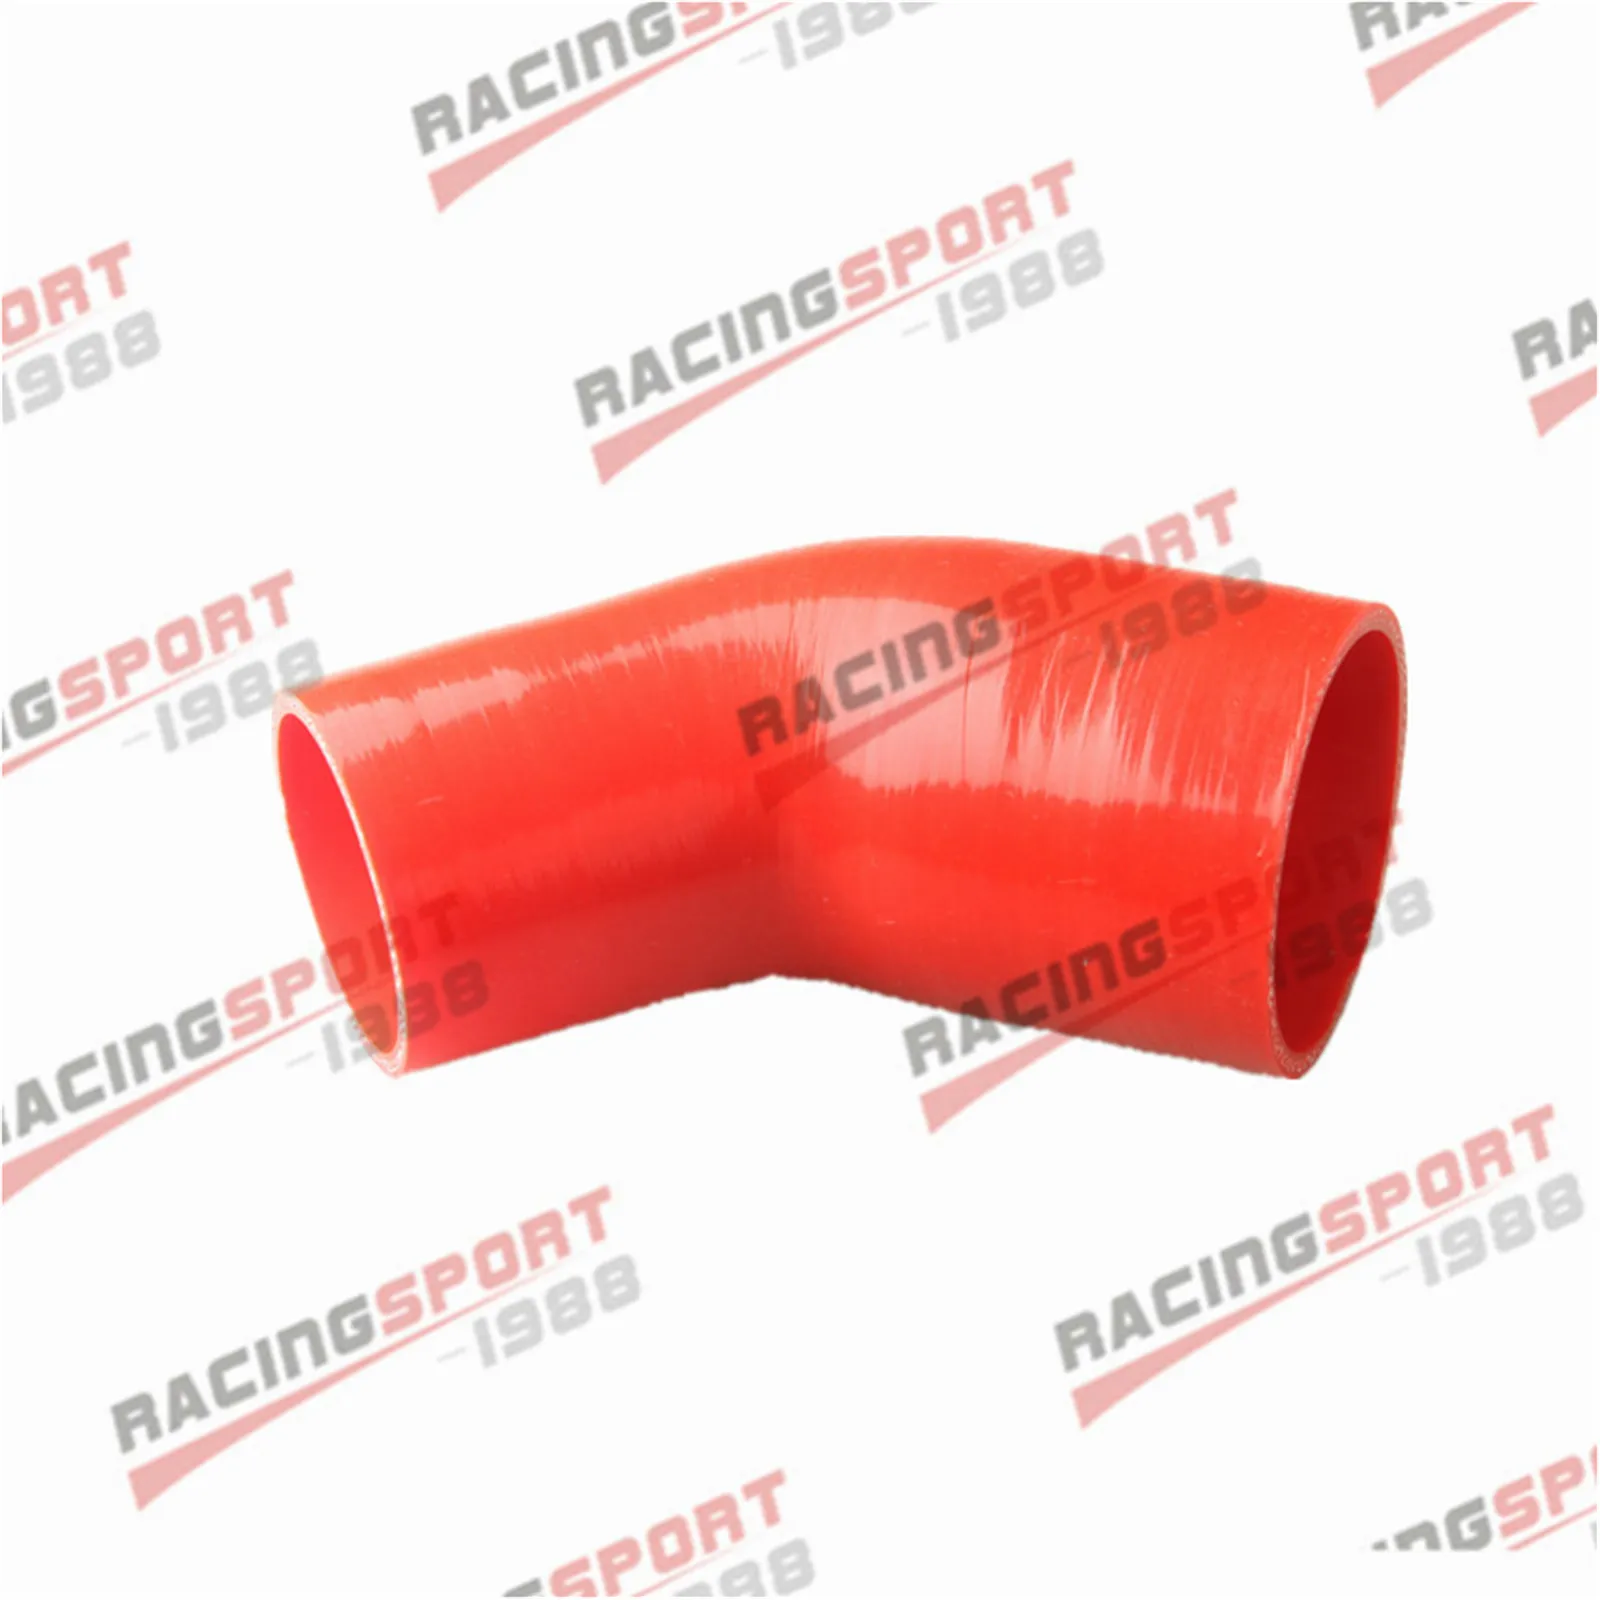 Acoplador de manguera de silicona de 45 grados de 3 a 2,75 pulgadas, tubo reductor, negro/rojo/azul